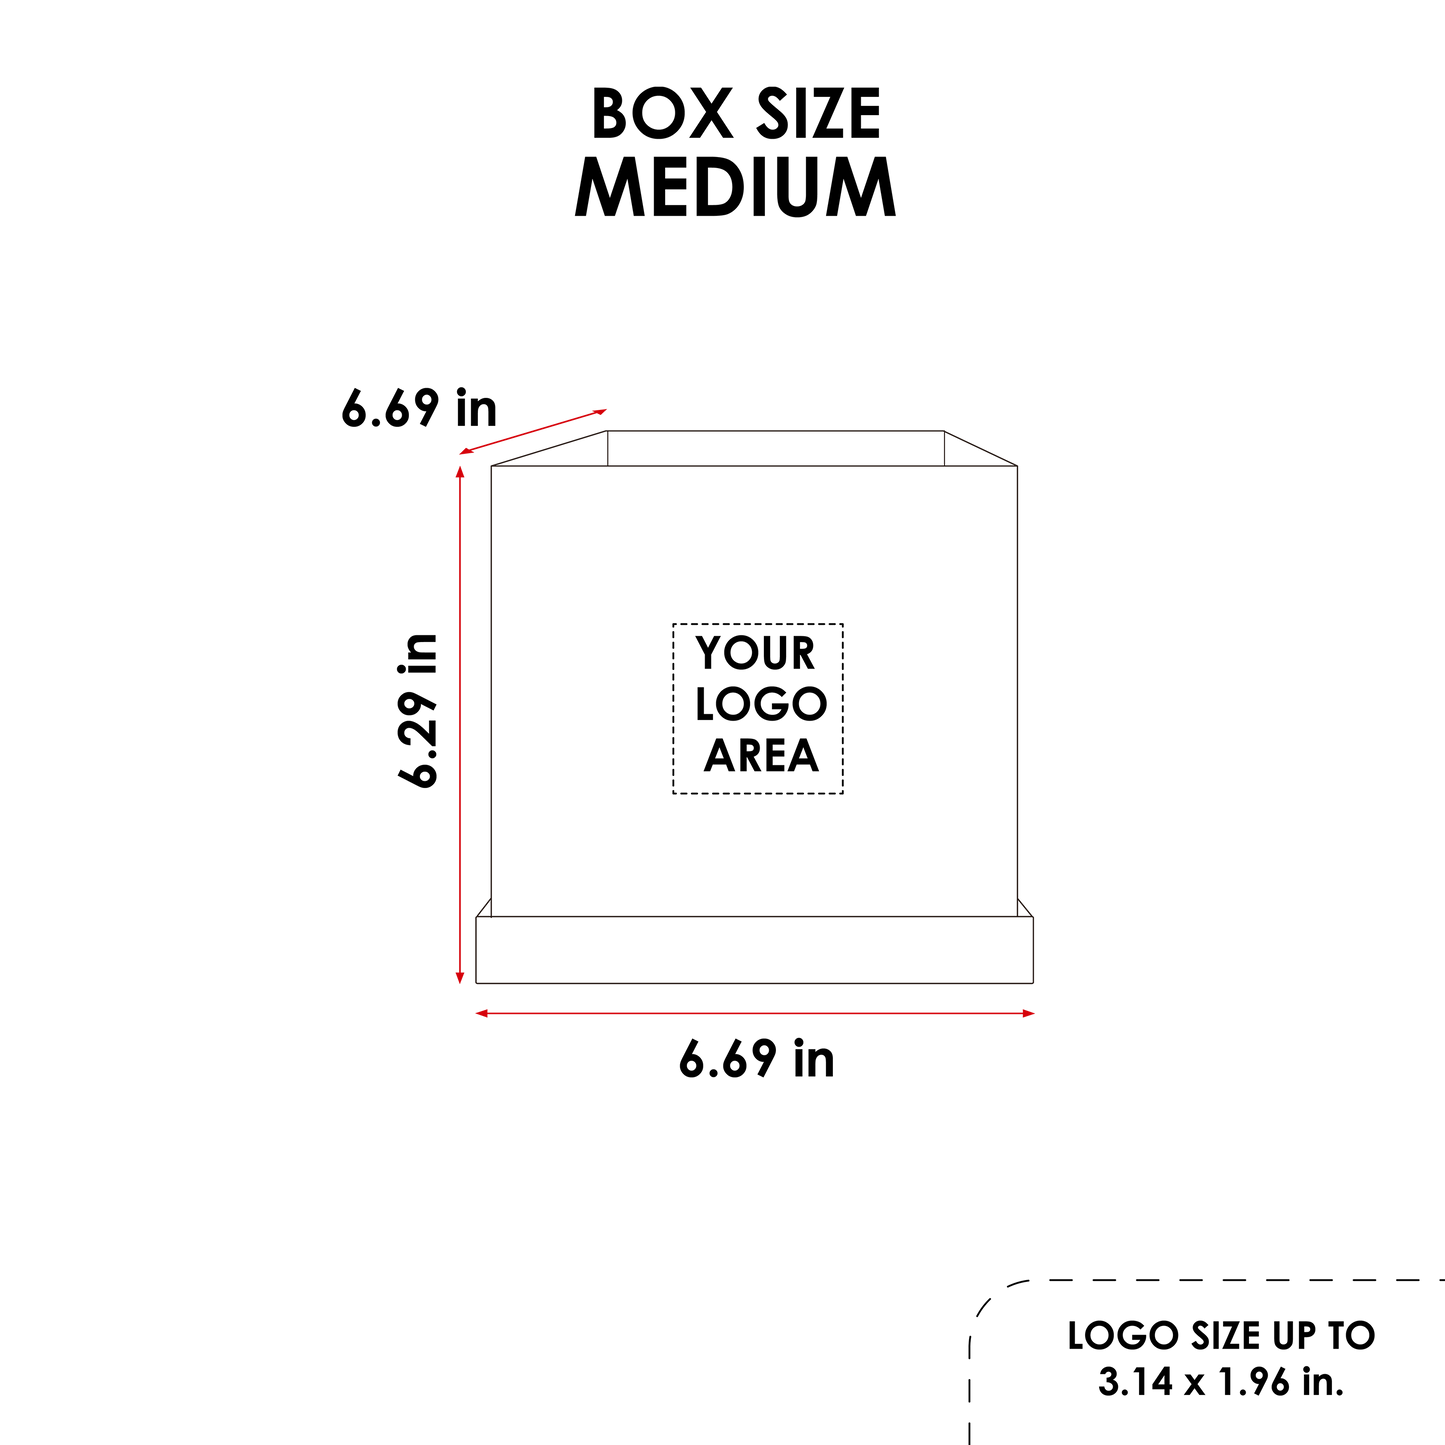 Square shape box - Suede Black